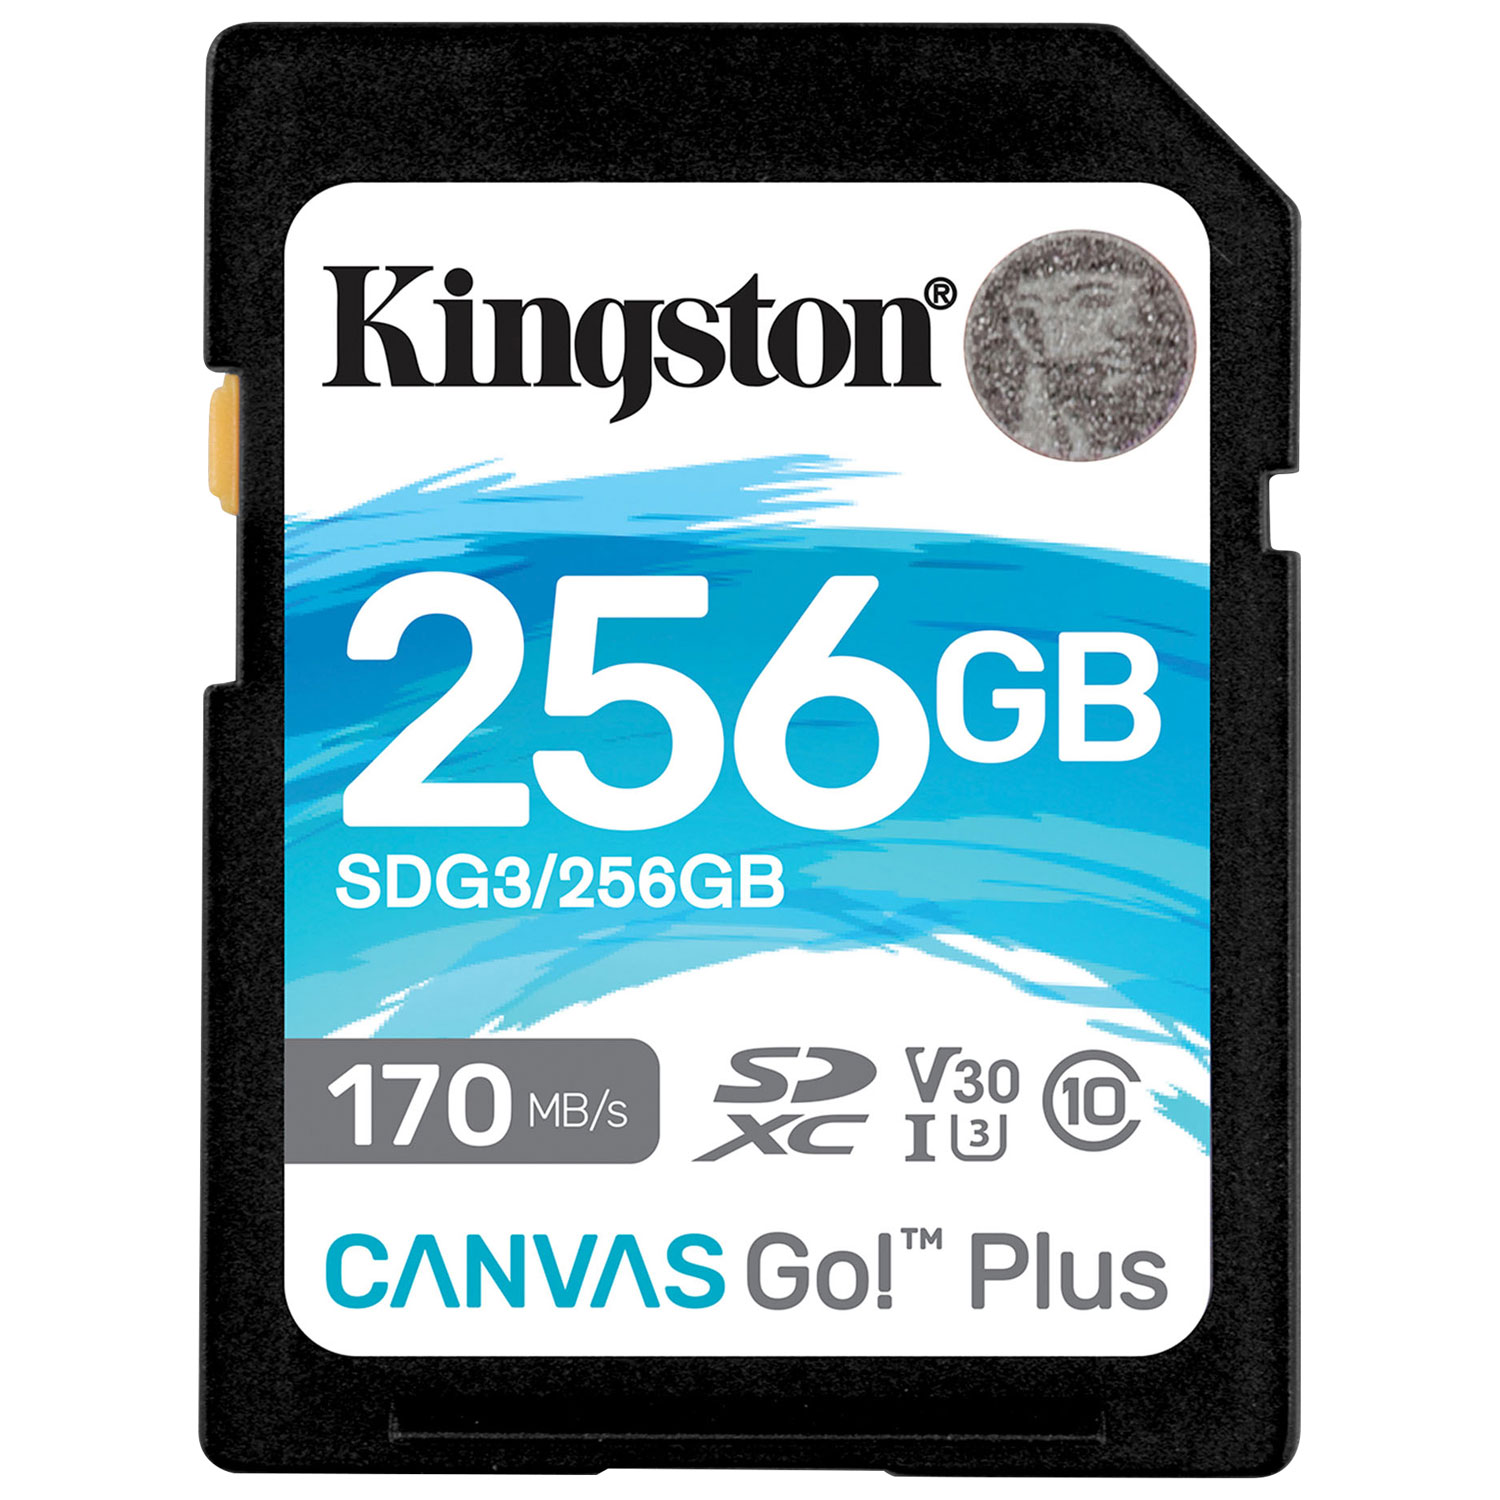 Kingston Canvas Go! Plus 256GB 170MB/s SDXC Memory Card